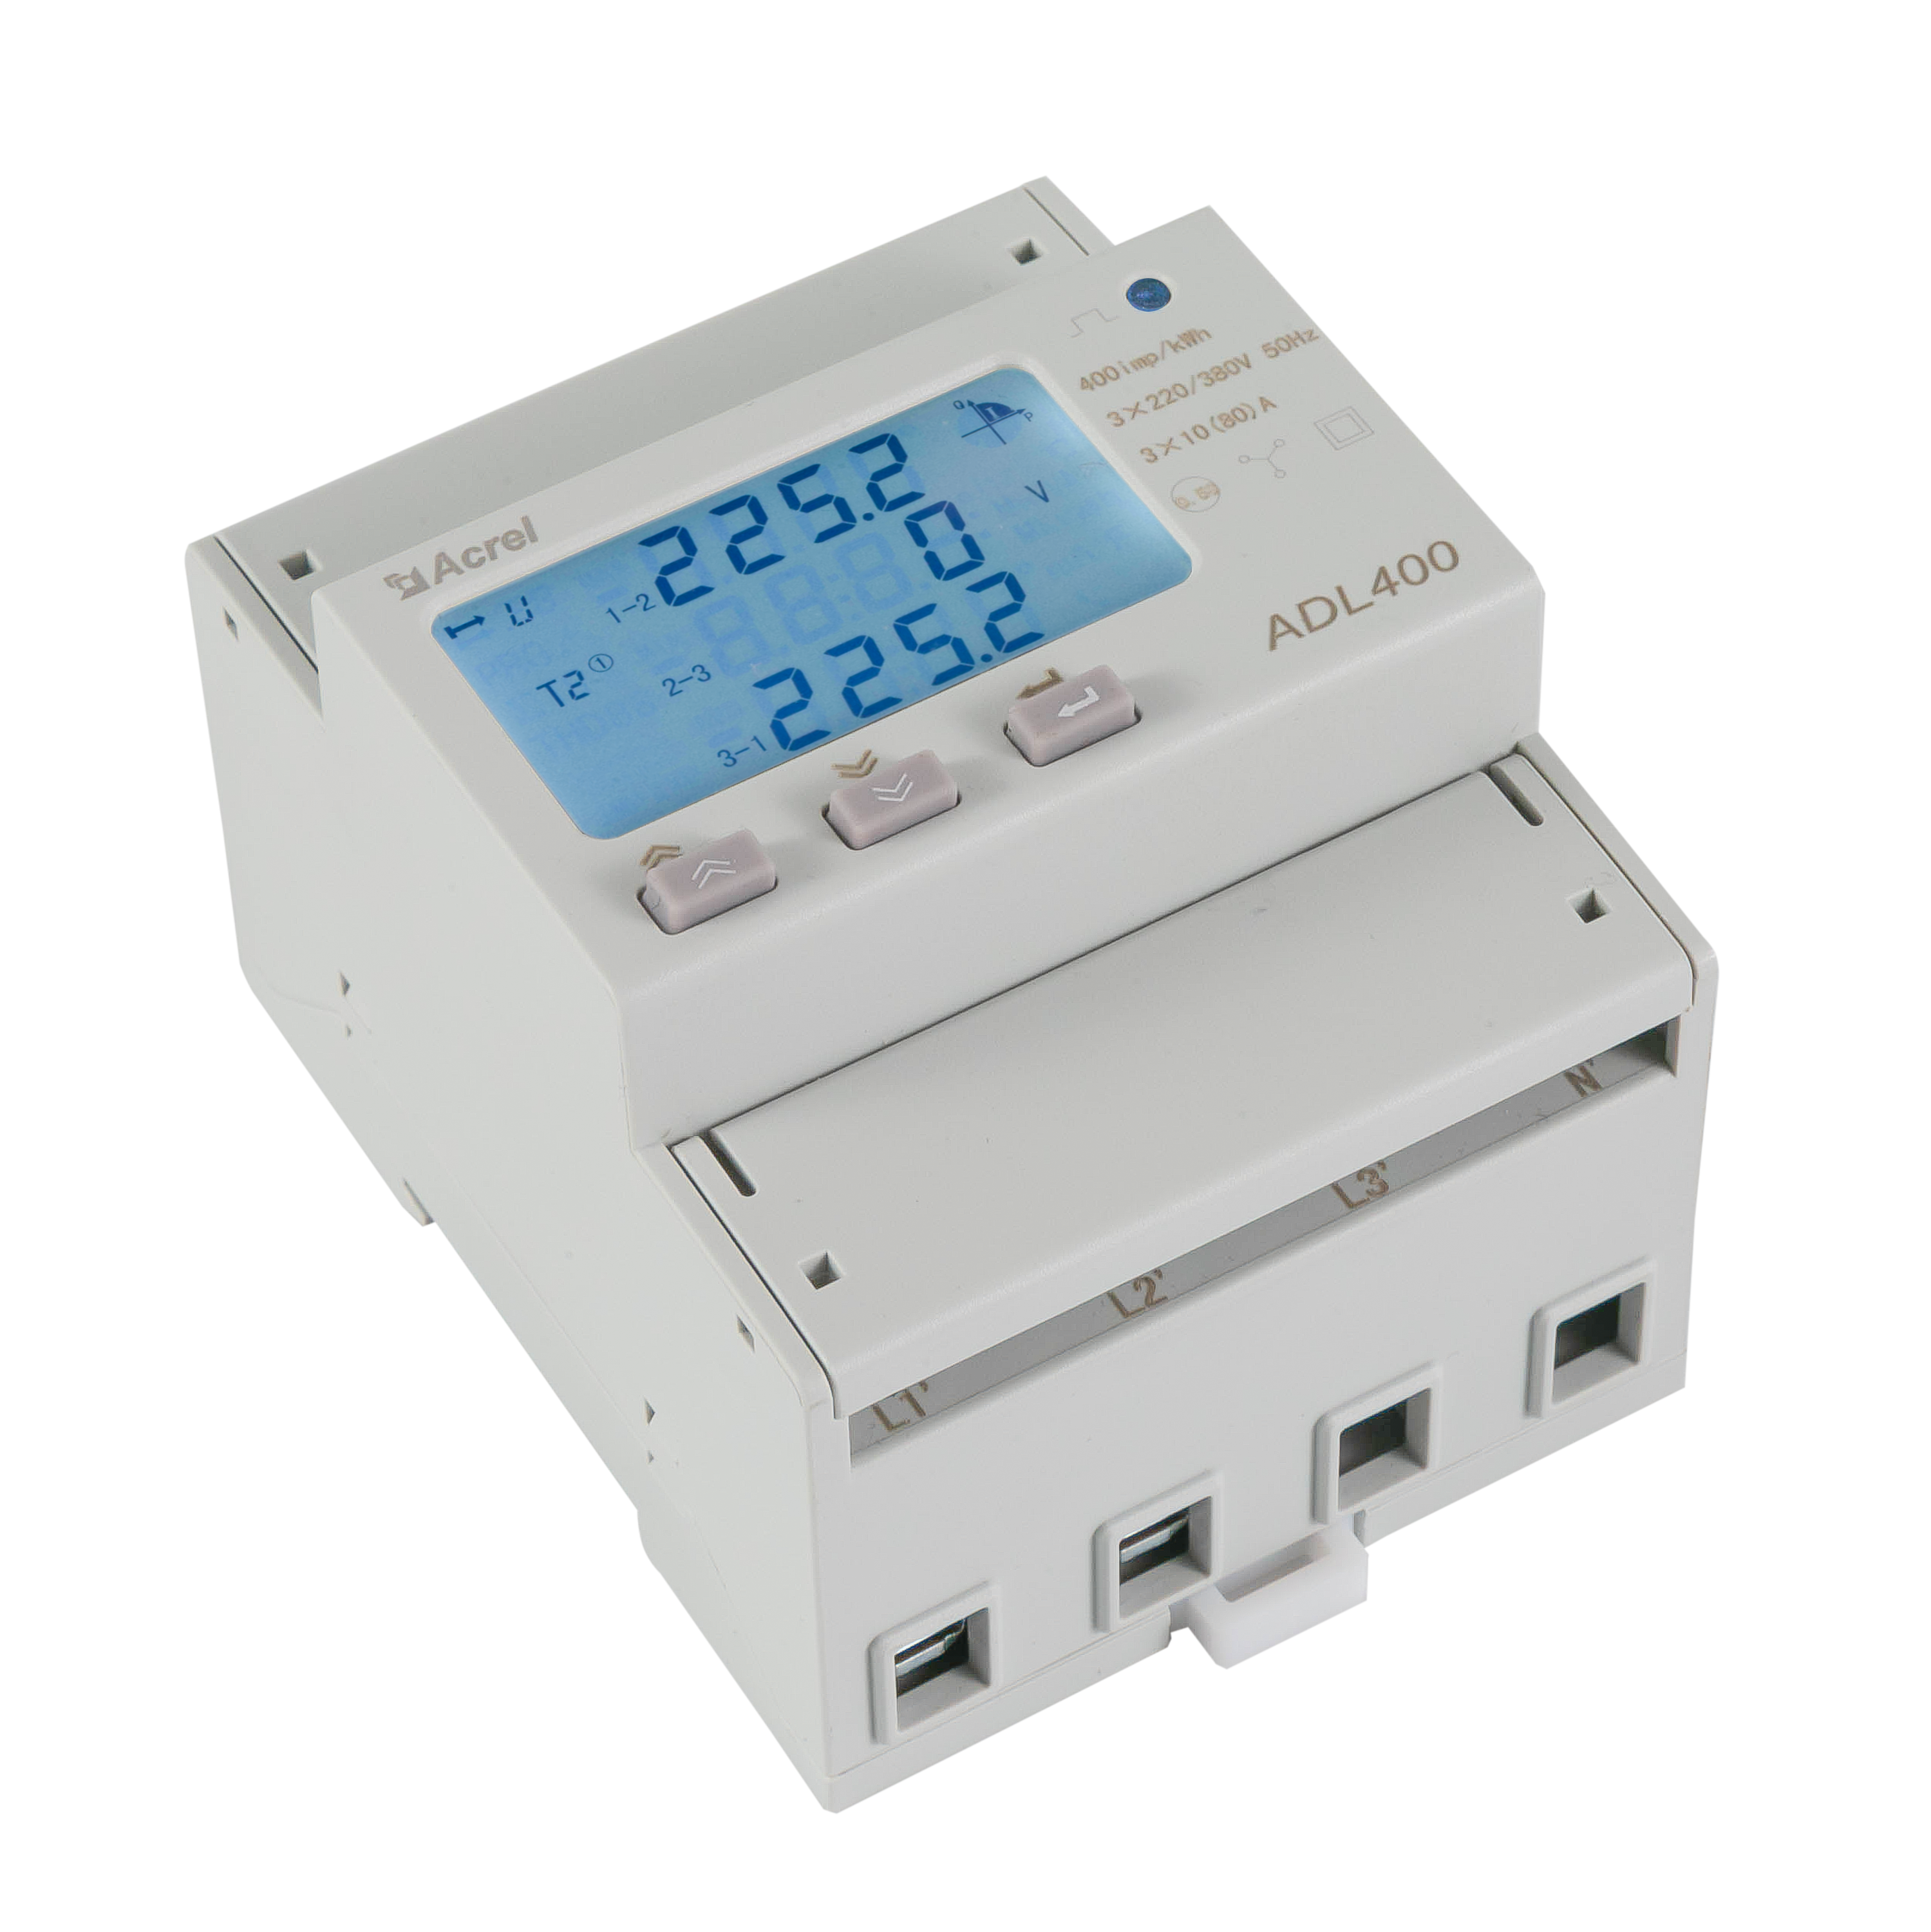 ADL400/C 3 Phase Energy Meter for IOT Platform Electricity Consumption  Monitoring - Acrel Co., Ltd.